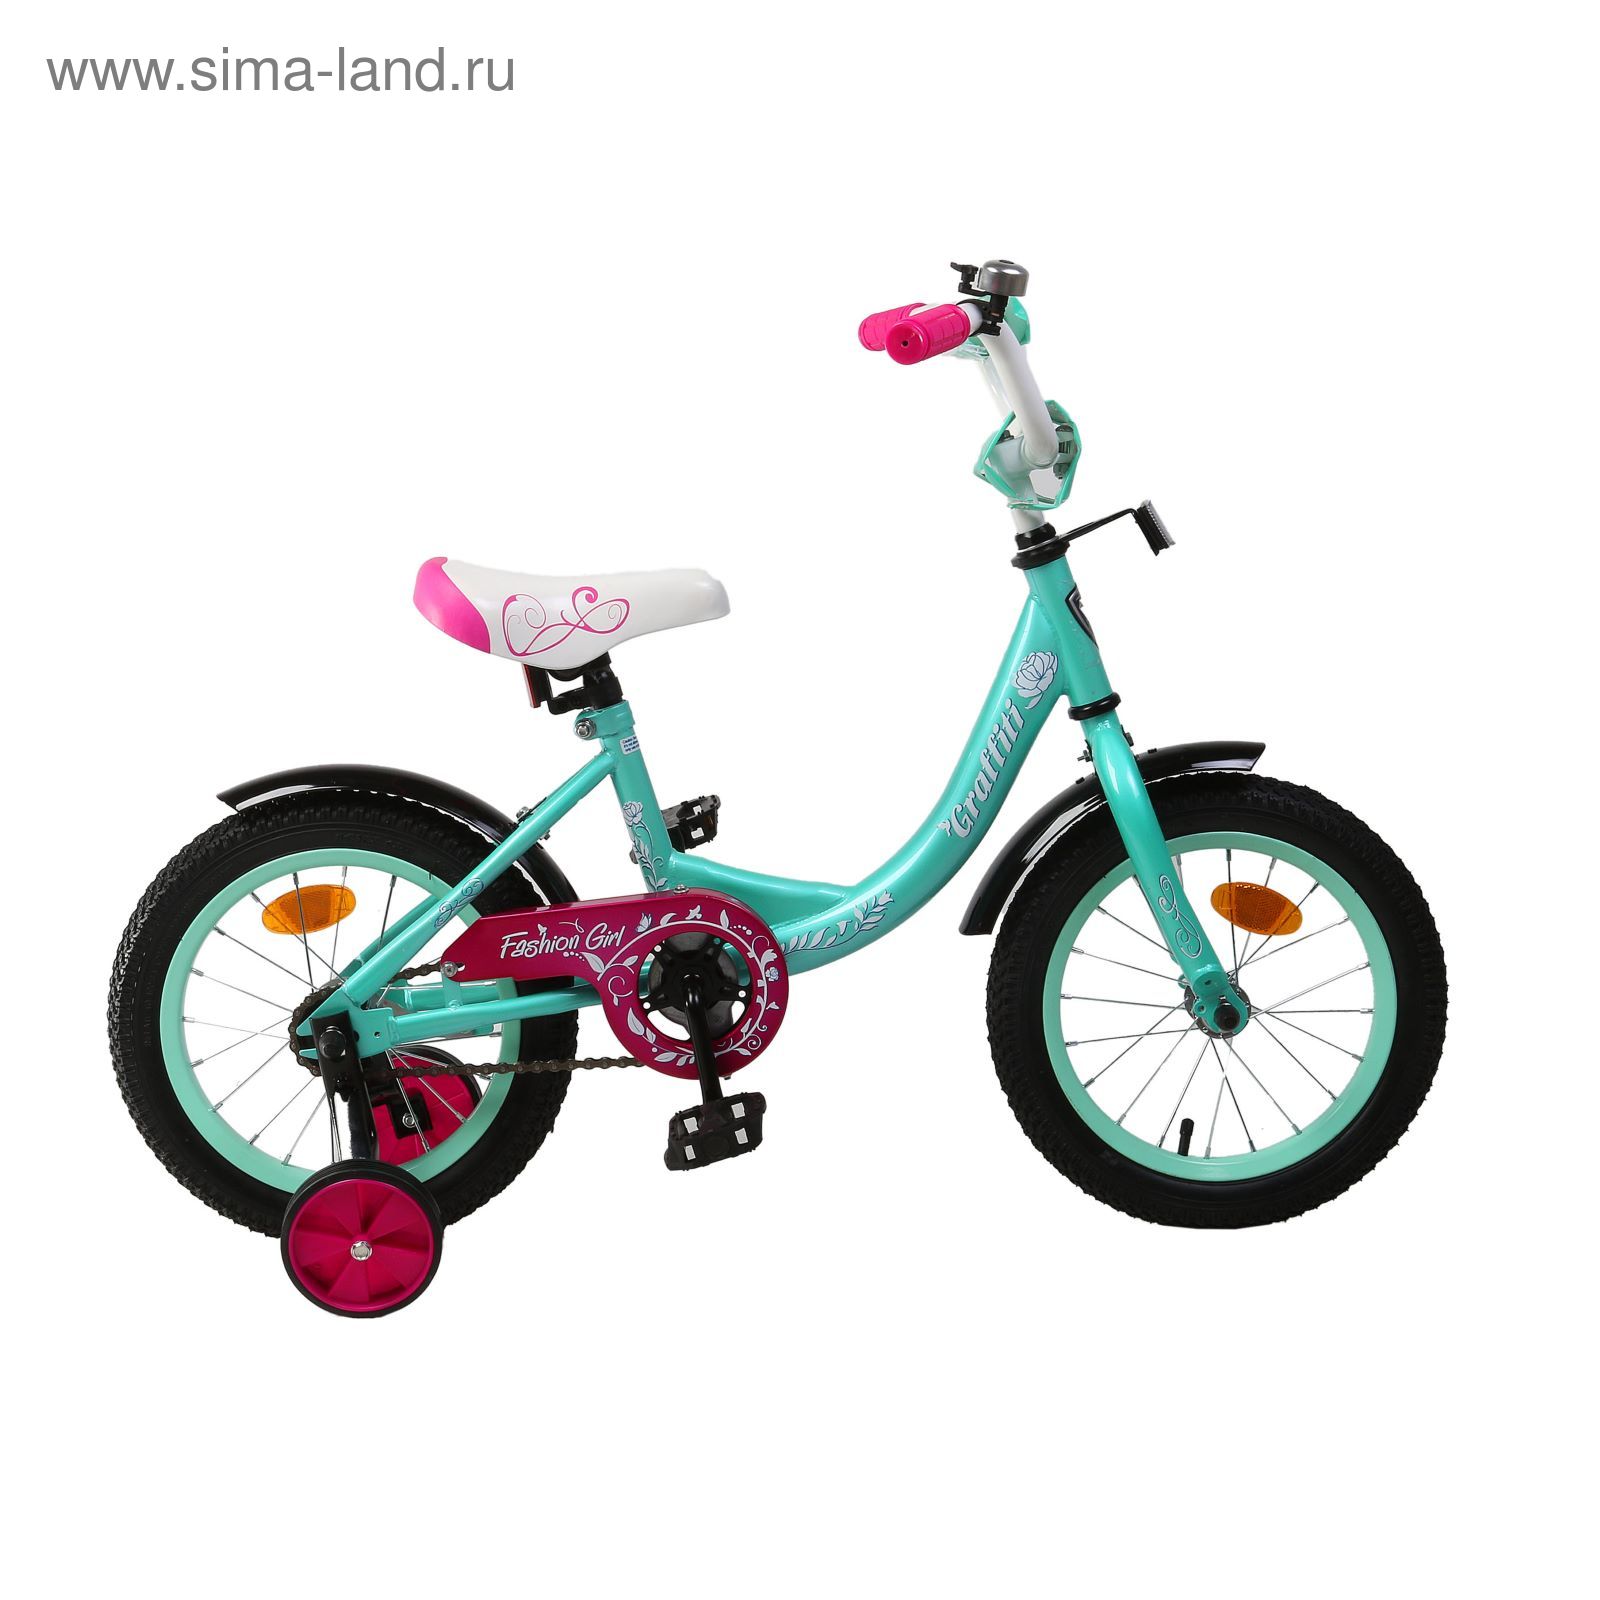 Велосипед 14" GRAFFITI Fashion Girl RUS, 2017, цвет бирюзовый